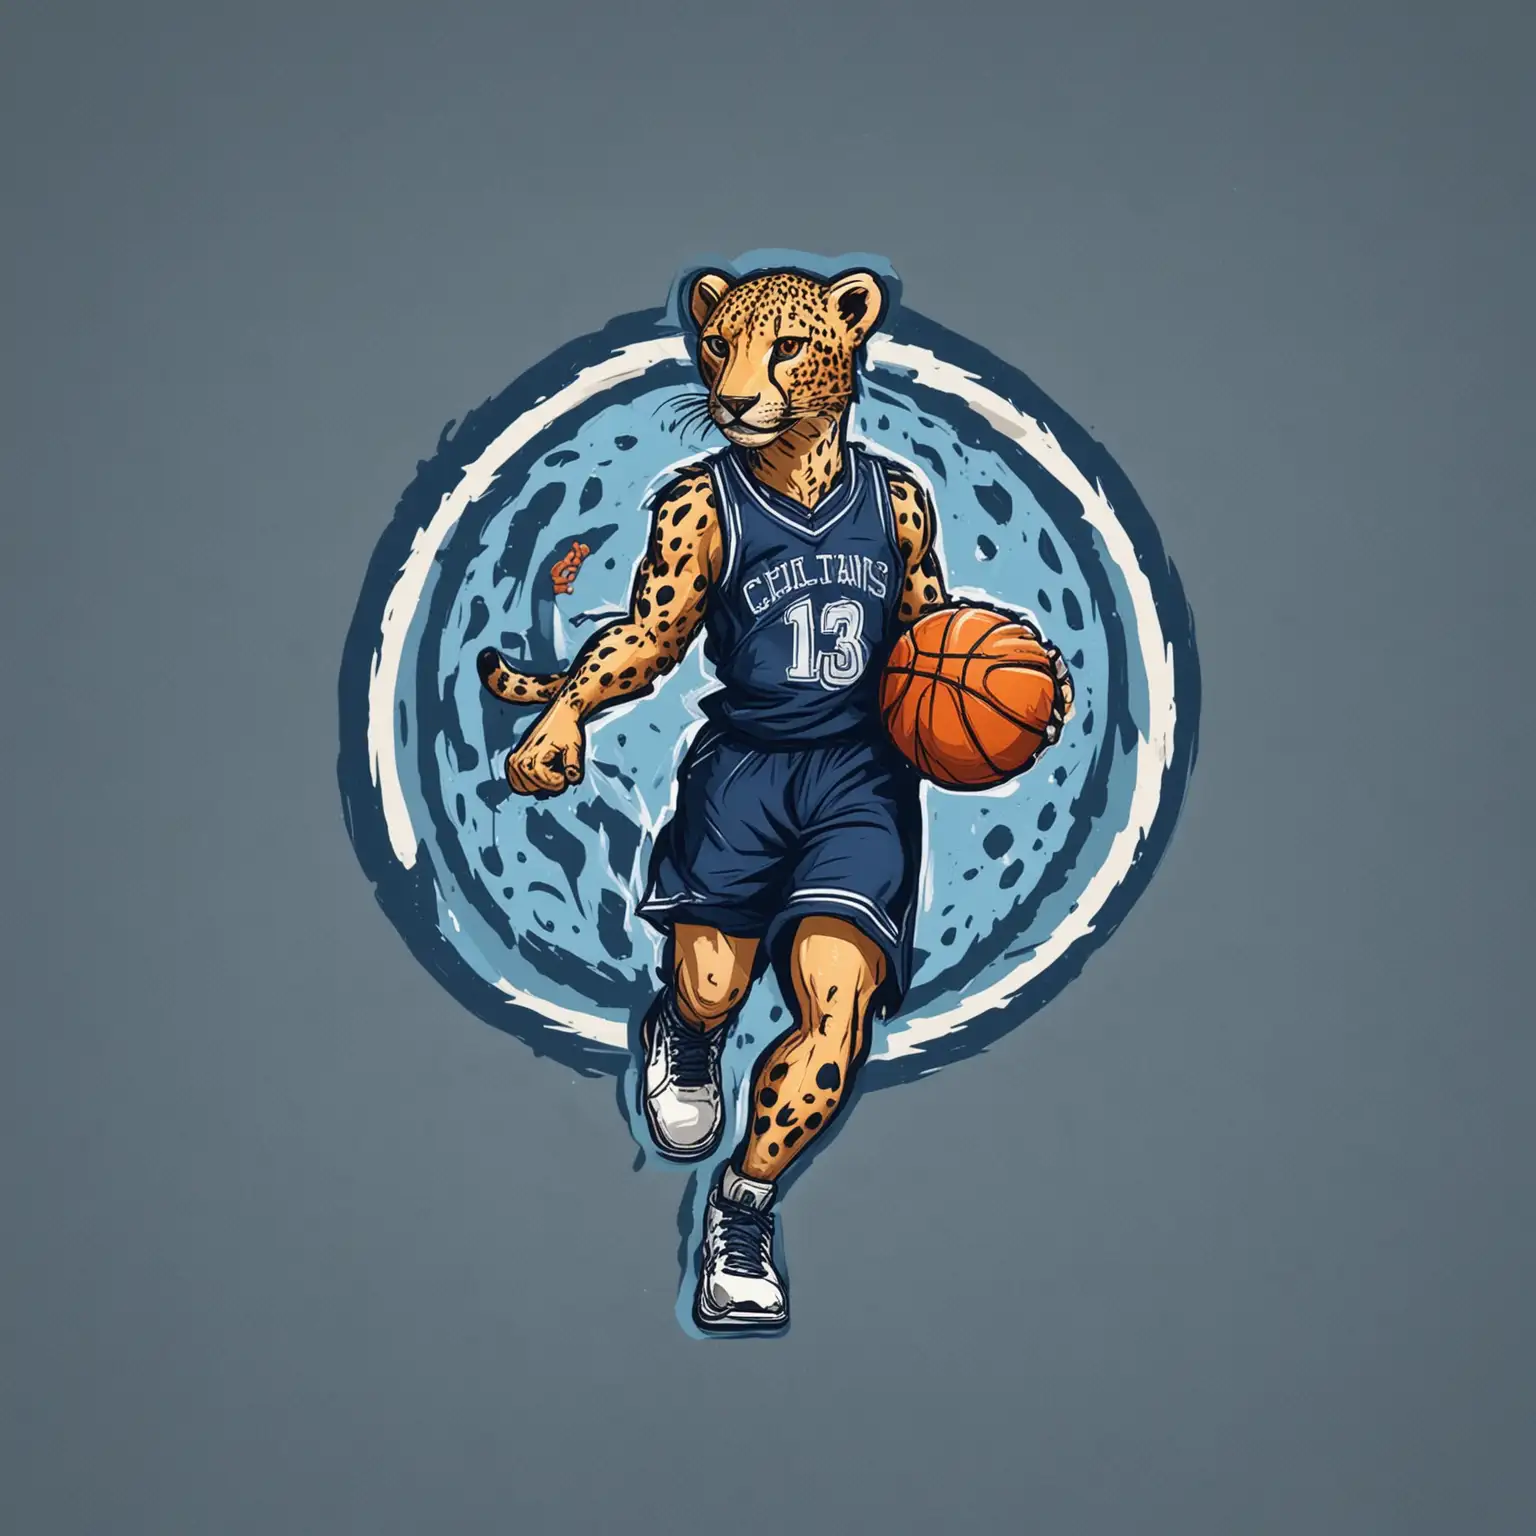 Dynamic Cheetah Basketball Player Logo in Navy Blue and White Uniform